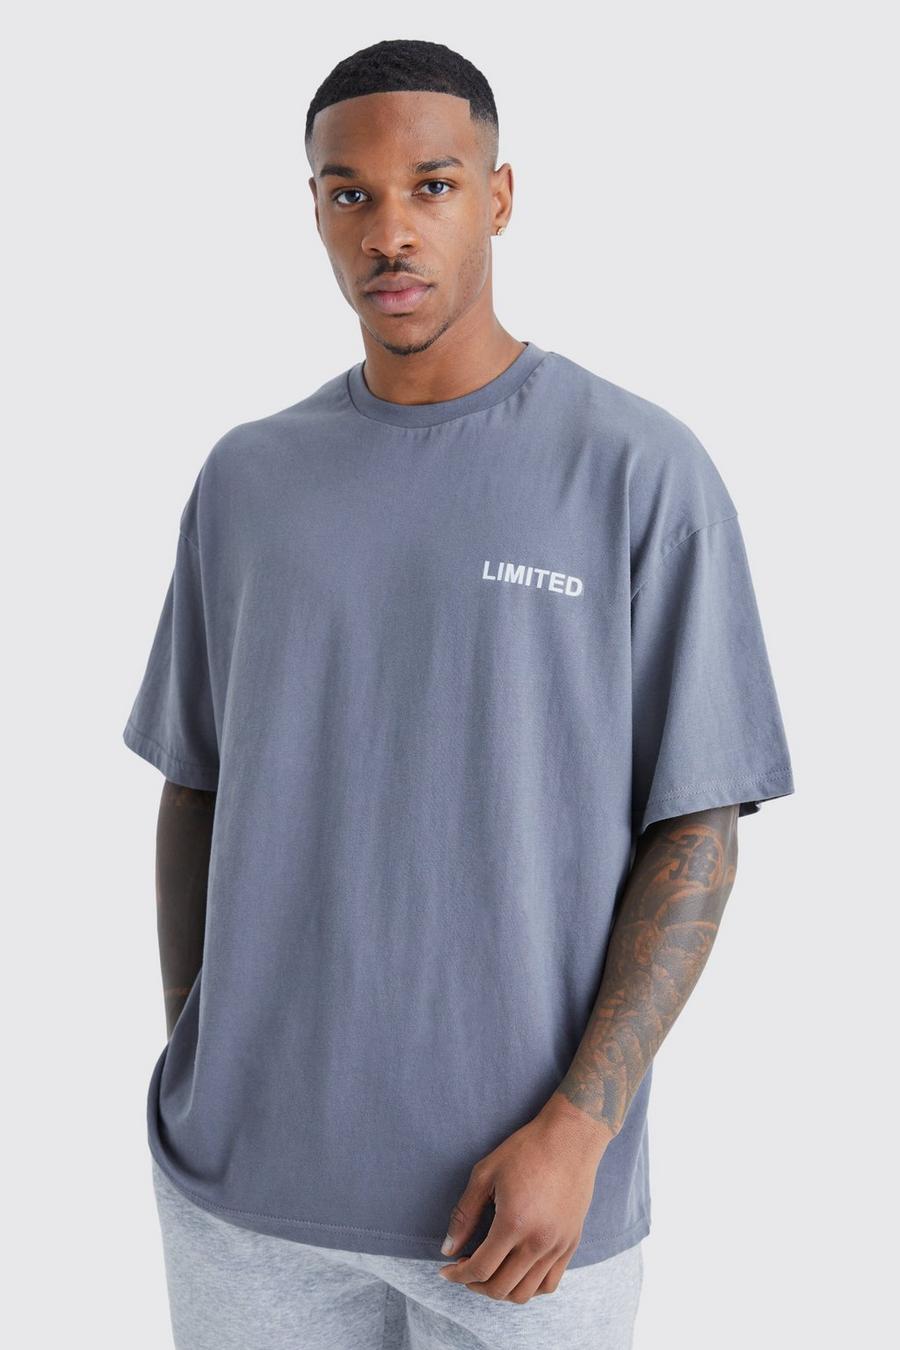 Camiseta oversize con texto Limited en relieve, Dark grey